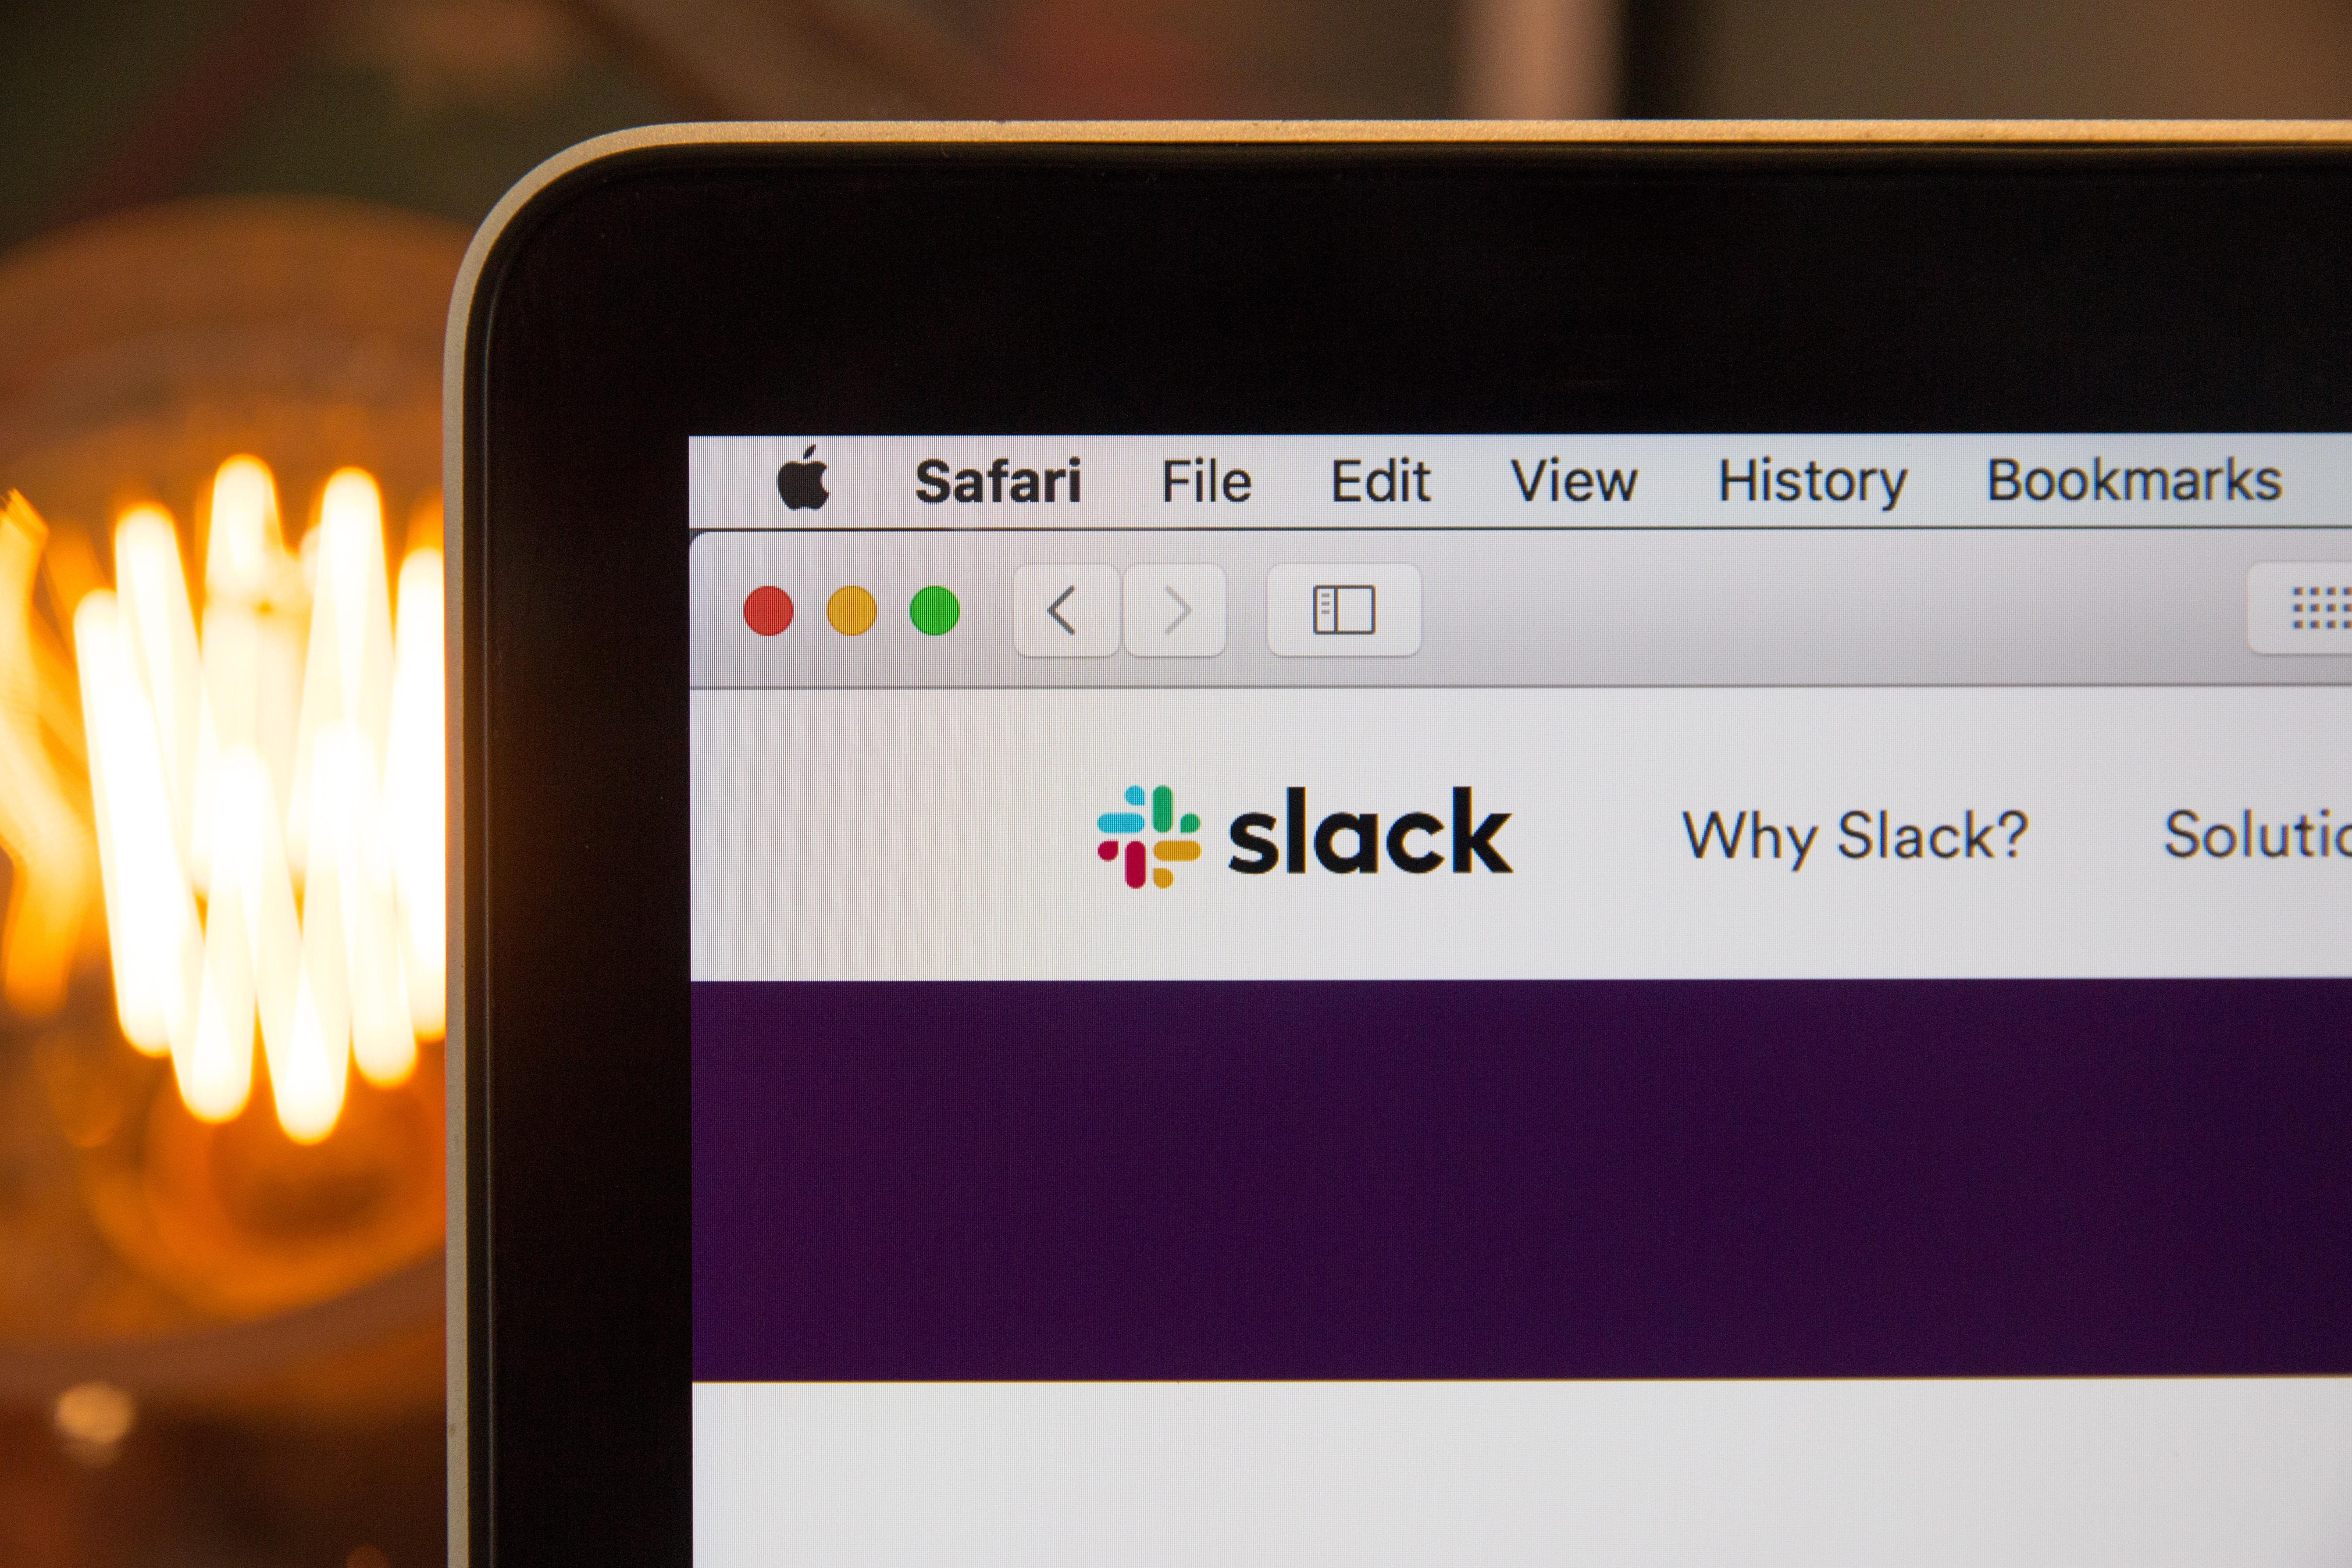 Slack opened on Safari Browser